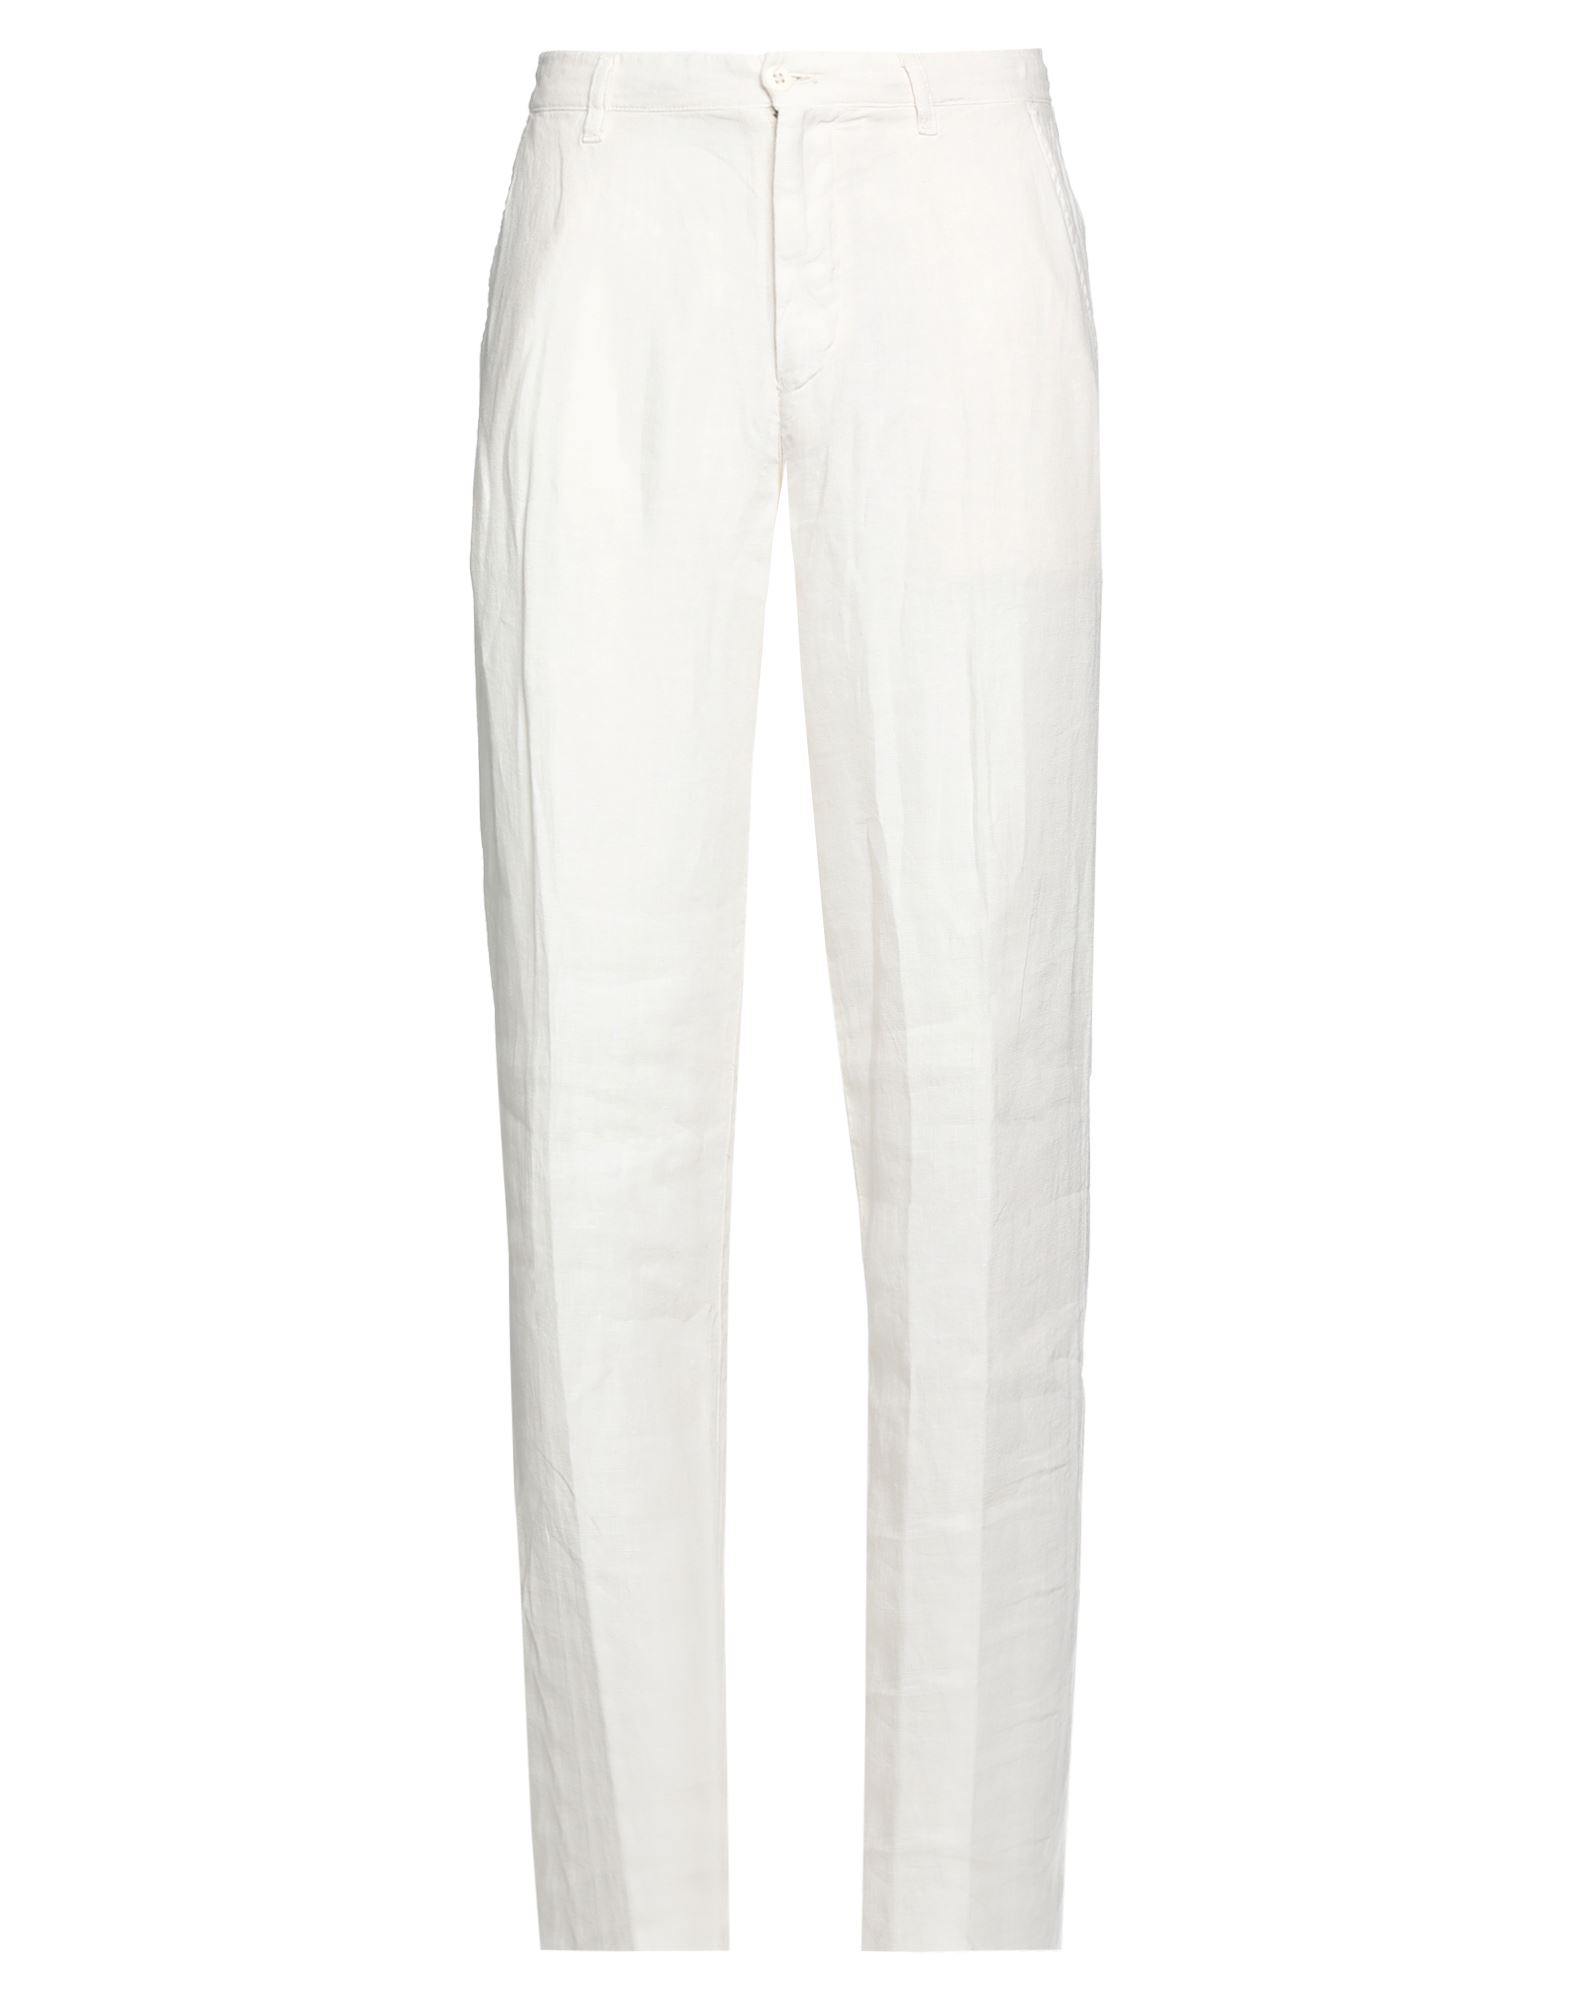 Em's Of Mason's Pants In White